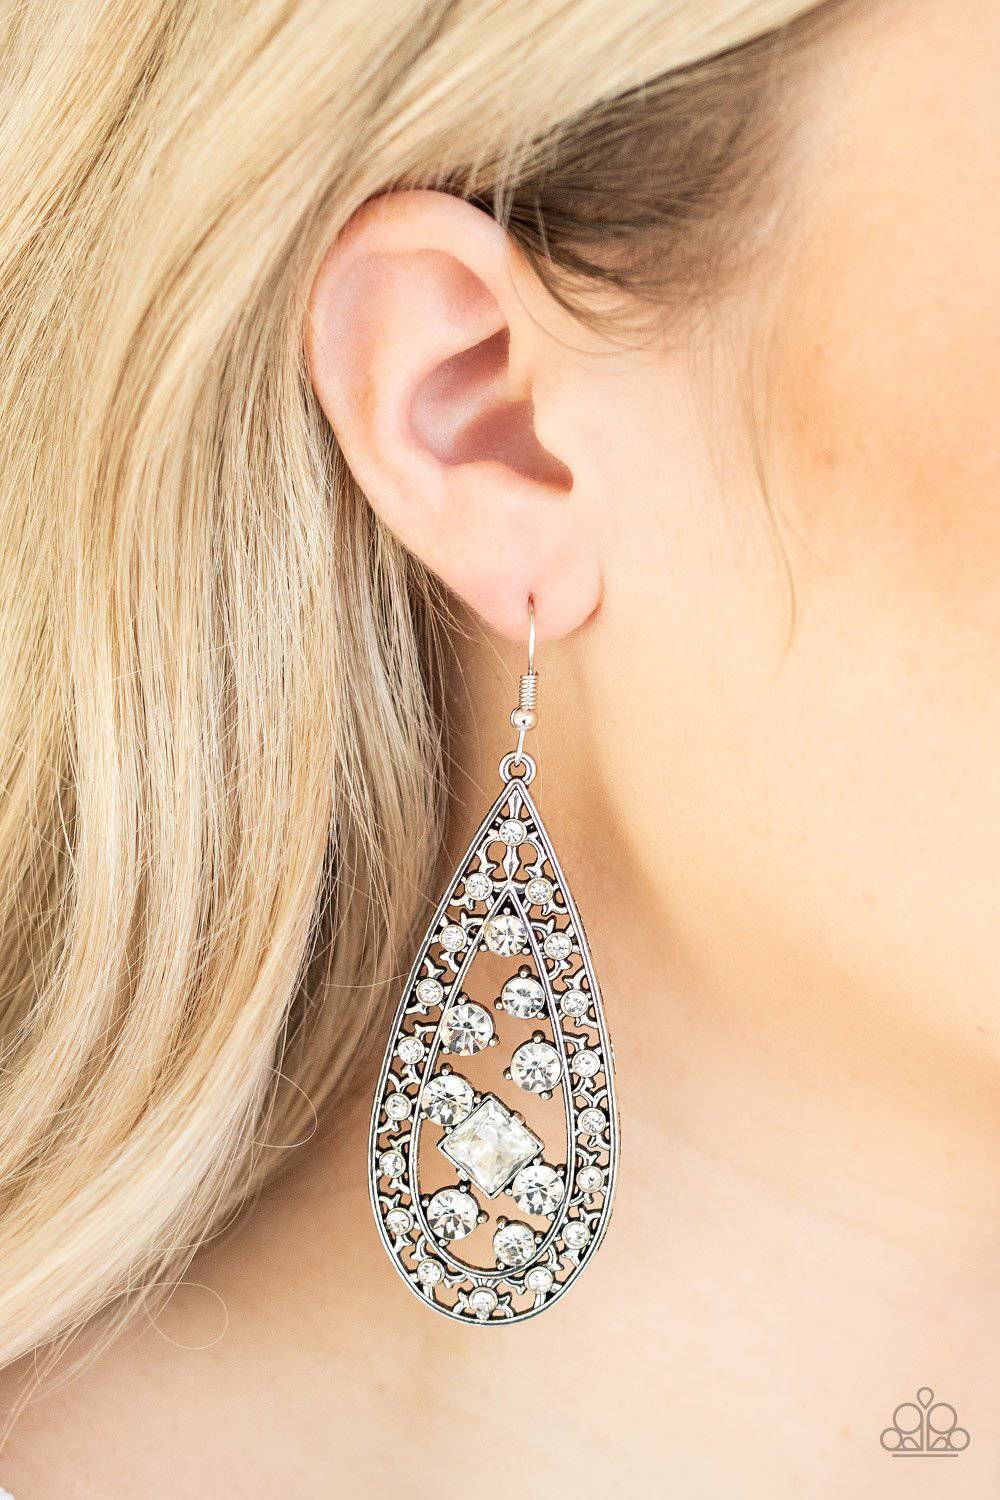 Drop-Dead Dazzle - White Rhinestone Earrings - Paparazzi Accessories - GlaMarous Titi Jewels